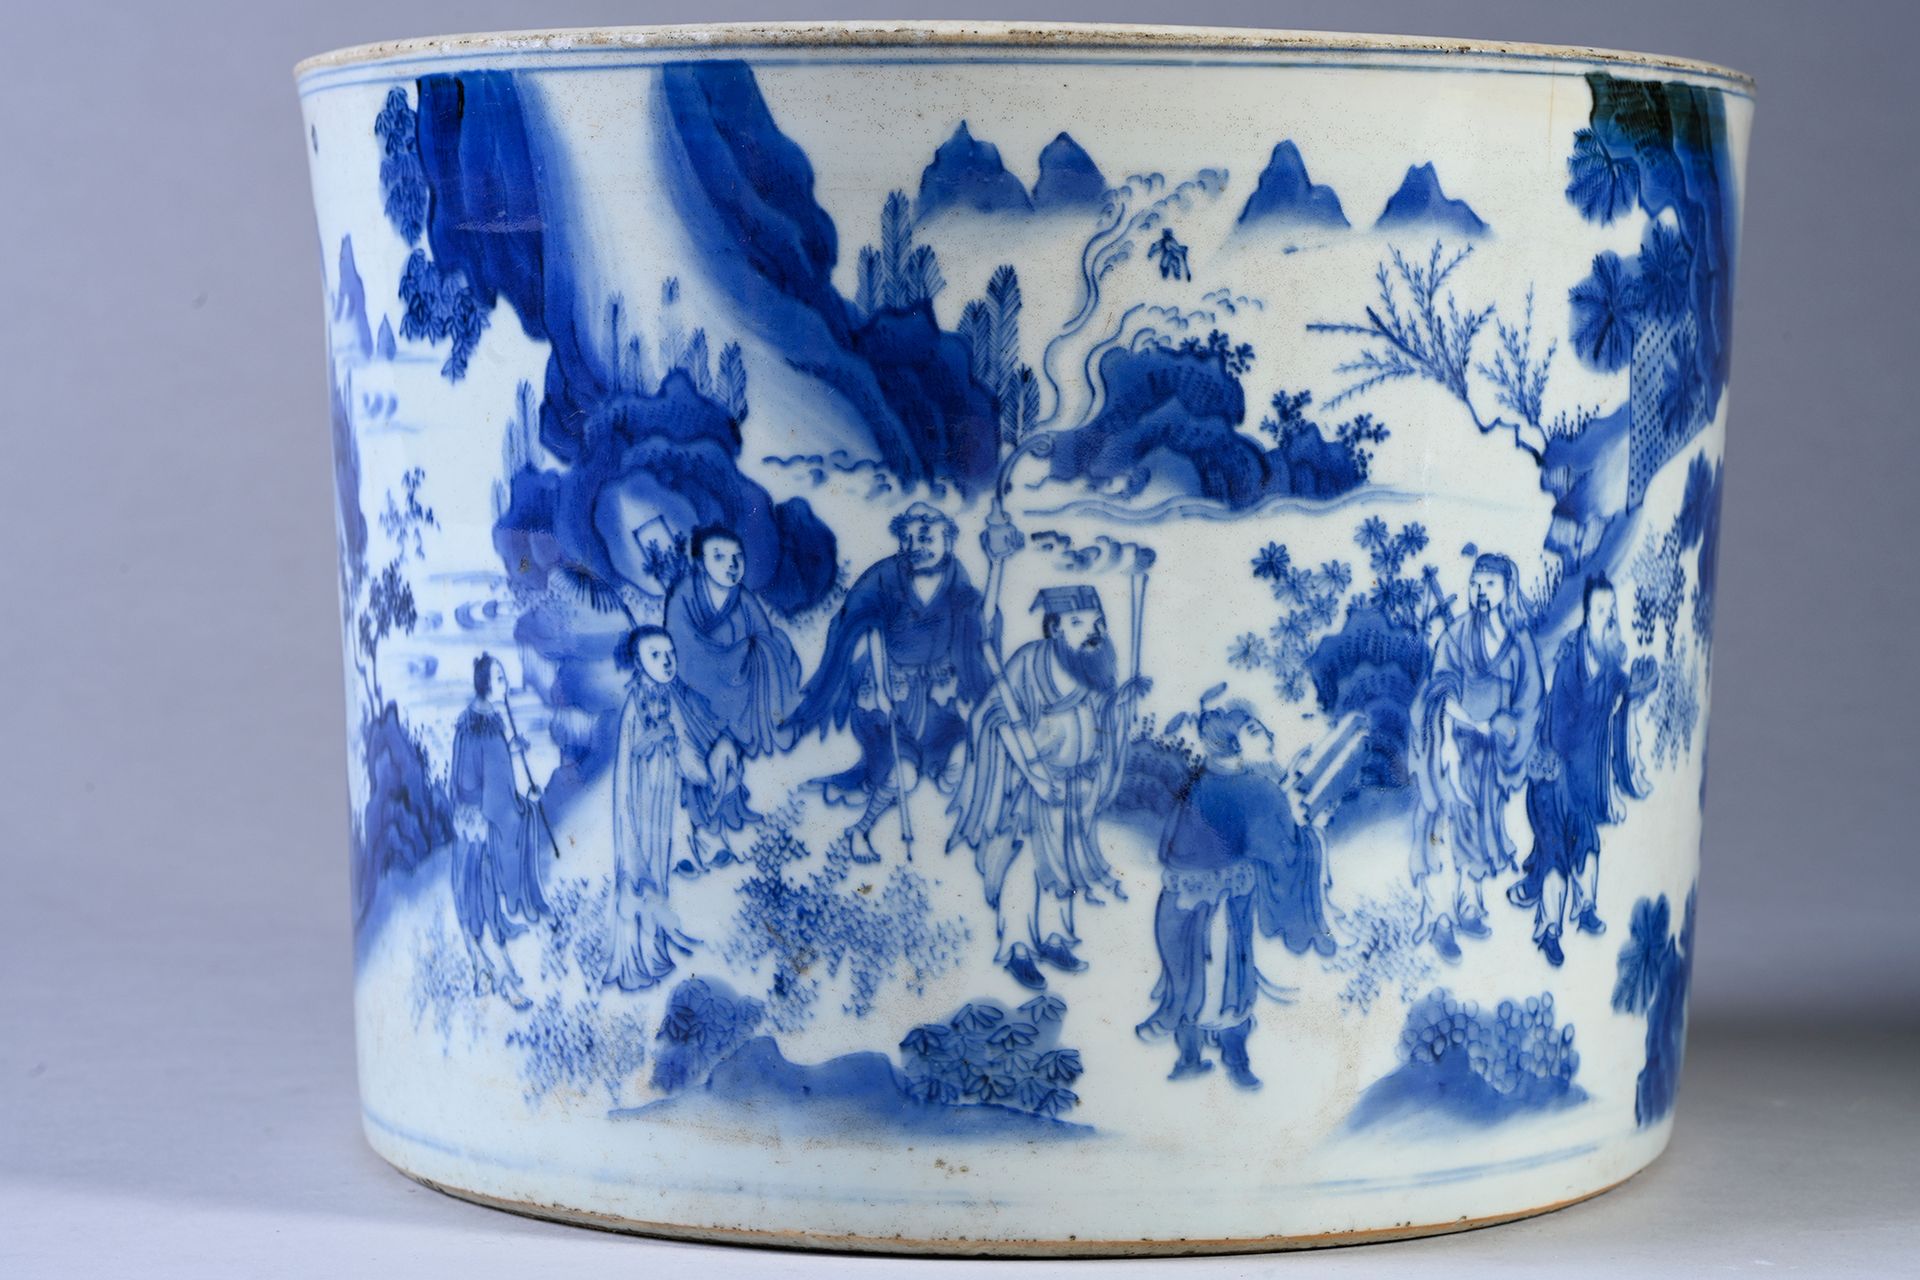 CHINE, Epoque Kangxi, XVIIIe siècle 瓷器 "比特龙 "毛笔壶，圆柱形，釉下钴蓝不同色调的带状装饰，描绘了户外风景中的神仙队伍&hellip;